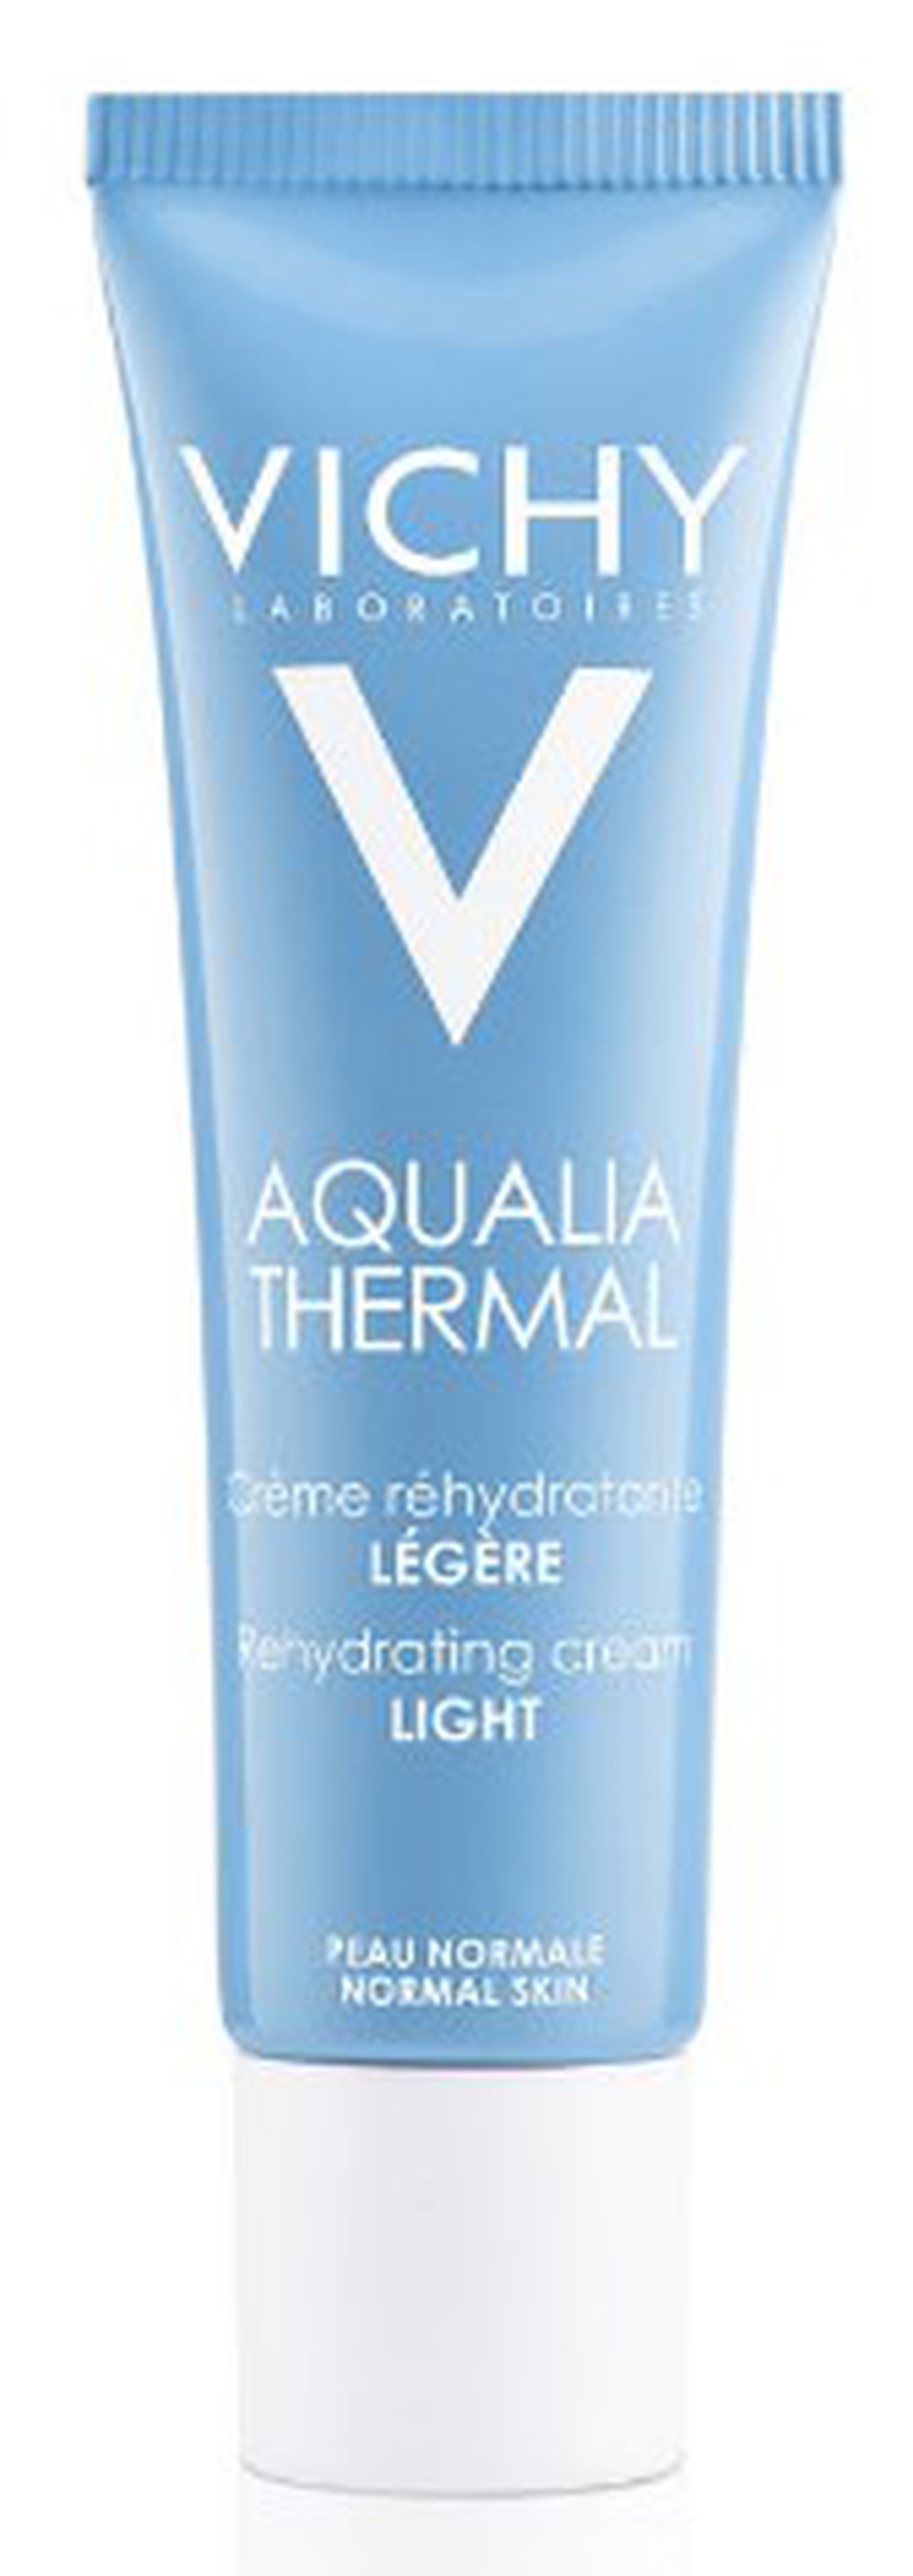 Vichy Aqualia Thermal крем легкий для нормальной кожи, 30мл фото